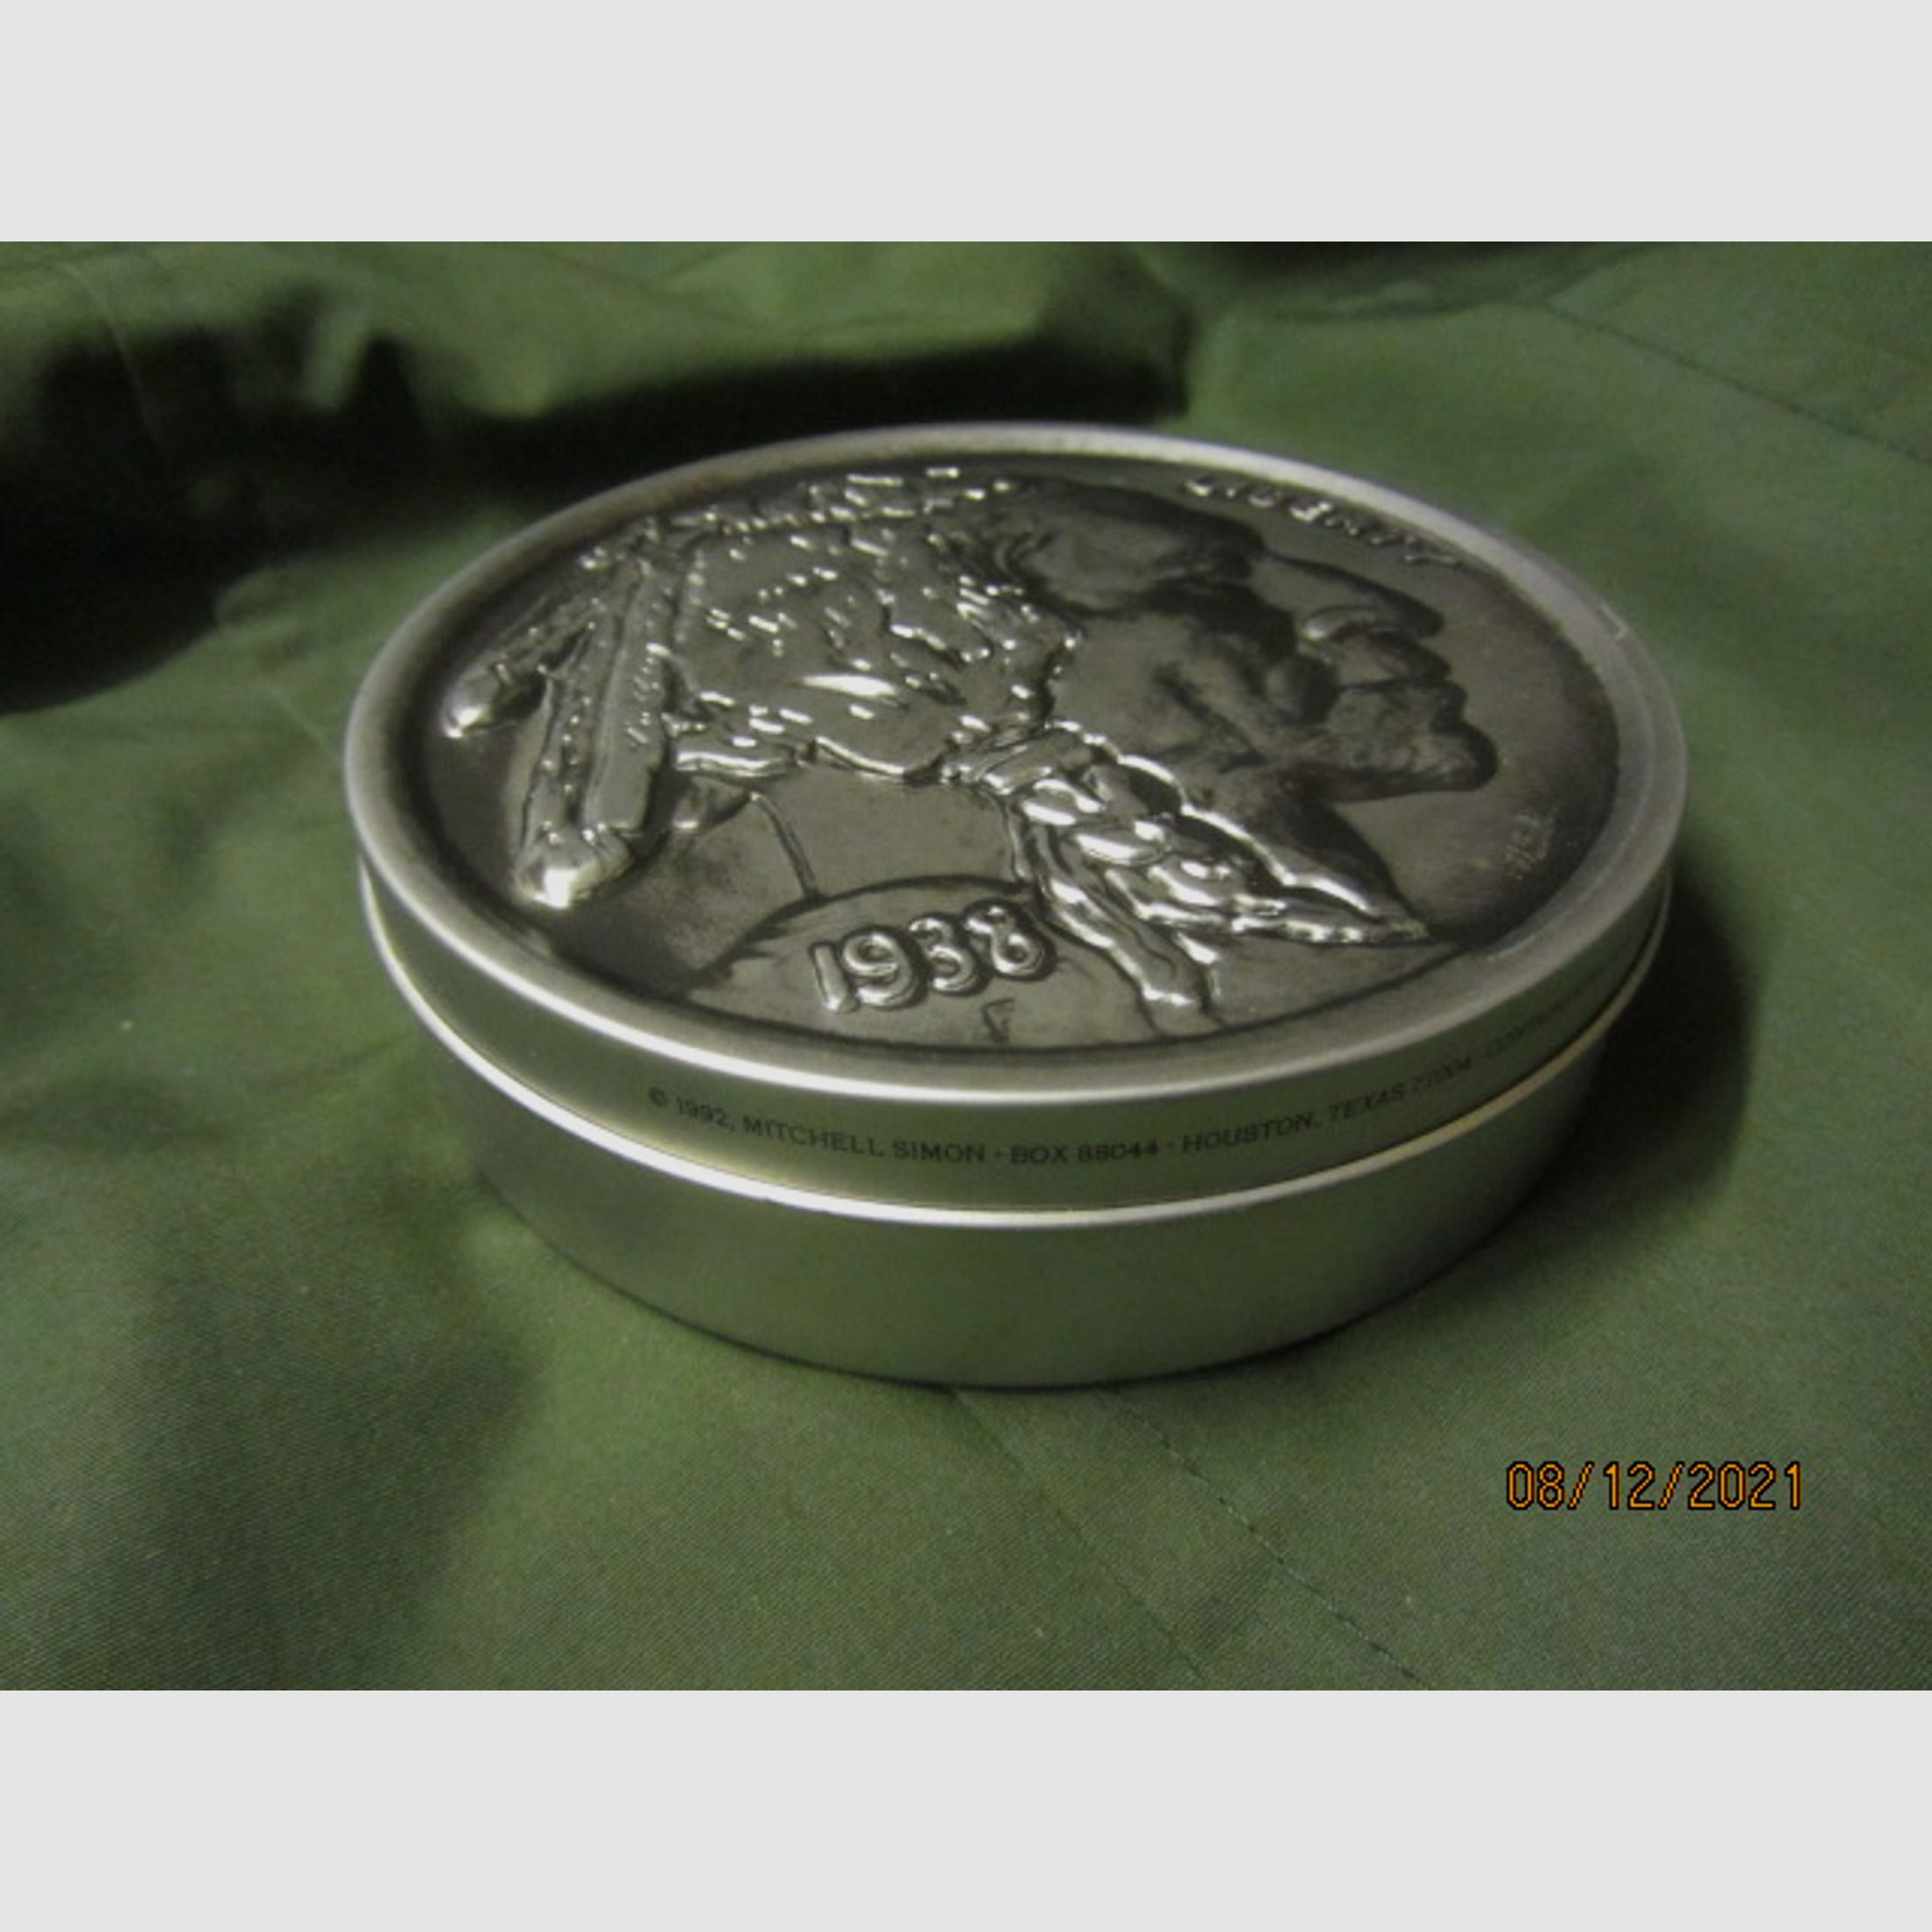 Blechdose 5 Cents Buffalo Nickel